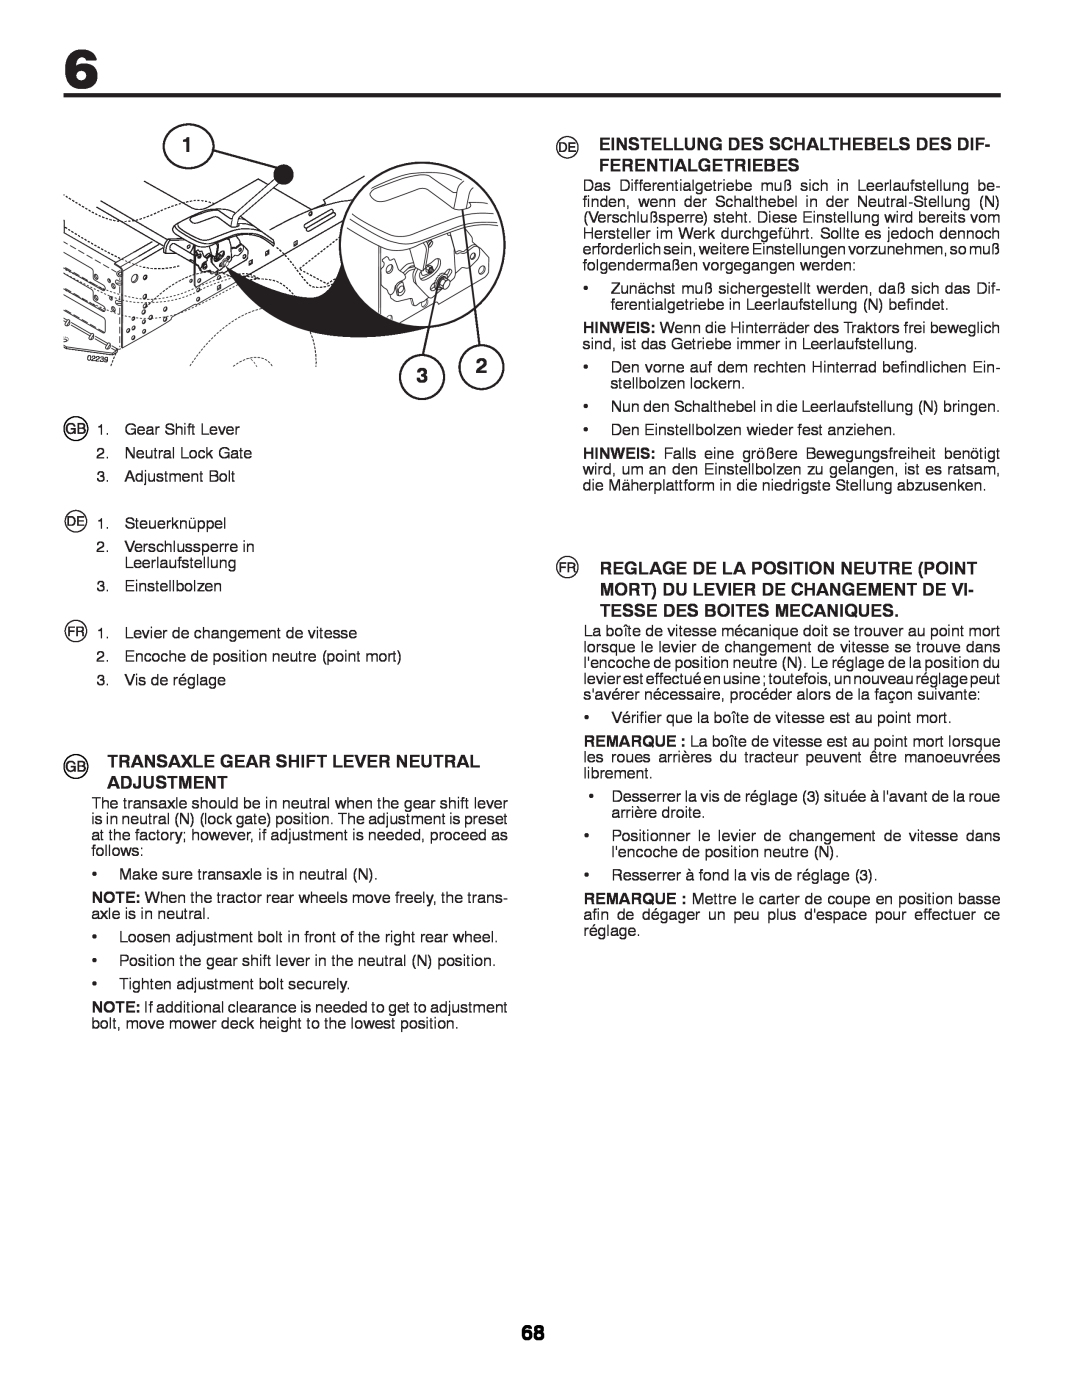 McCulloch 532 43 42-91 Rev. 1 instruction manual Transaxle Gear Shift Lever Neutral Adjustment 